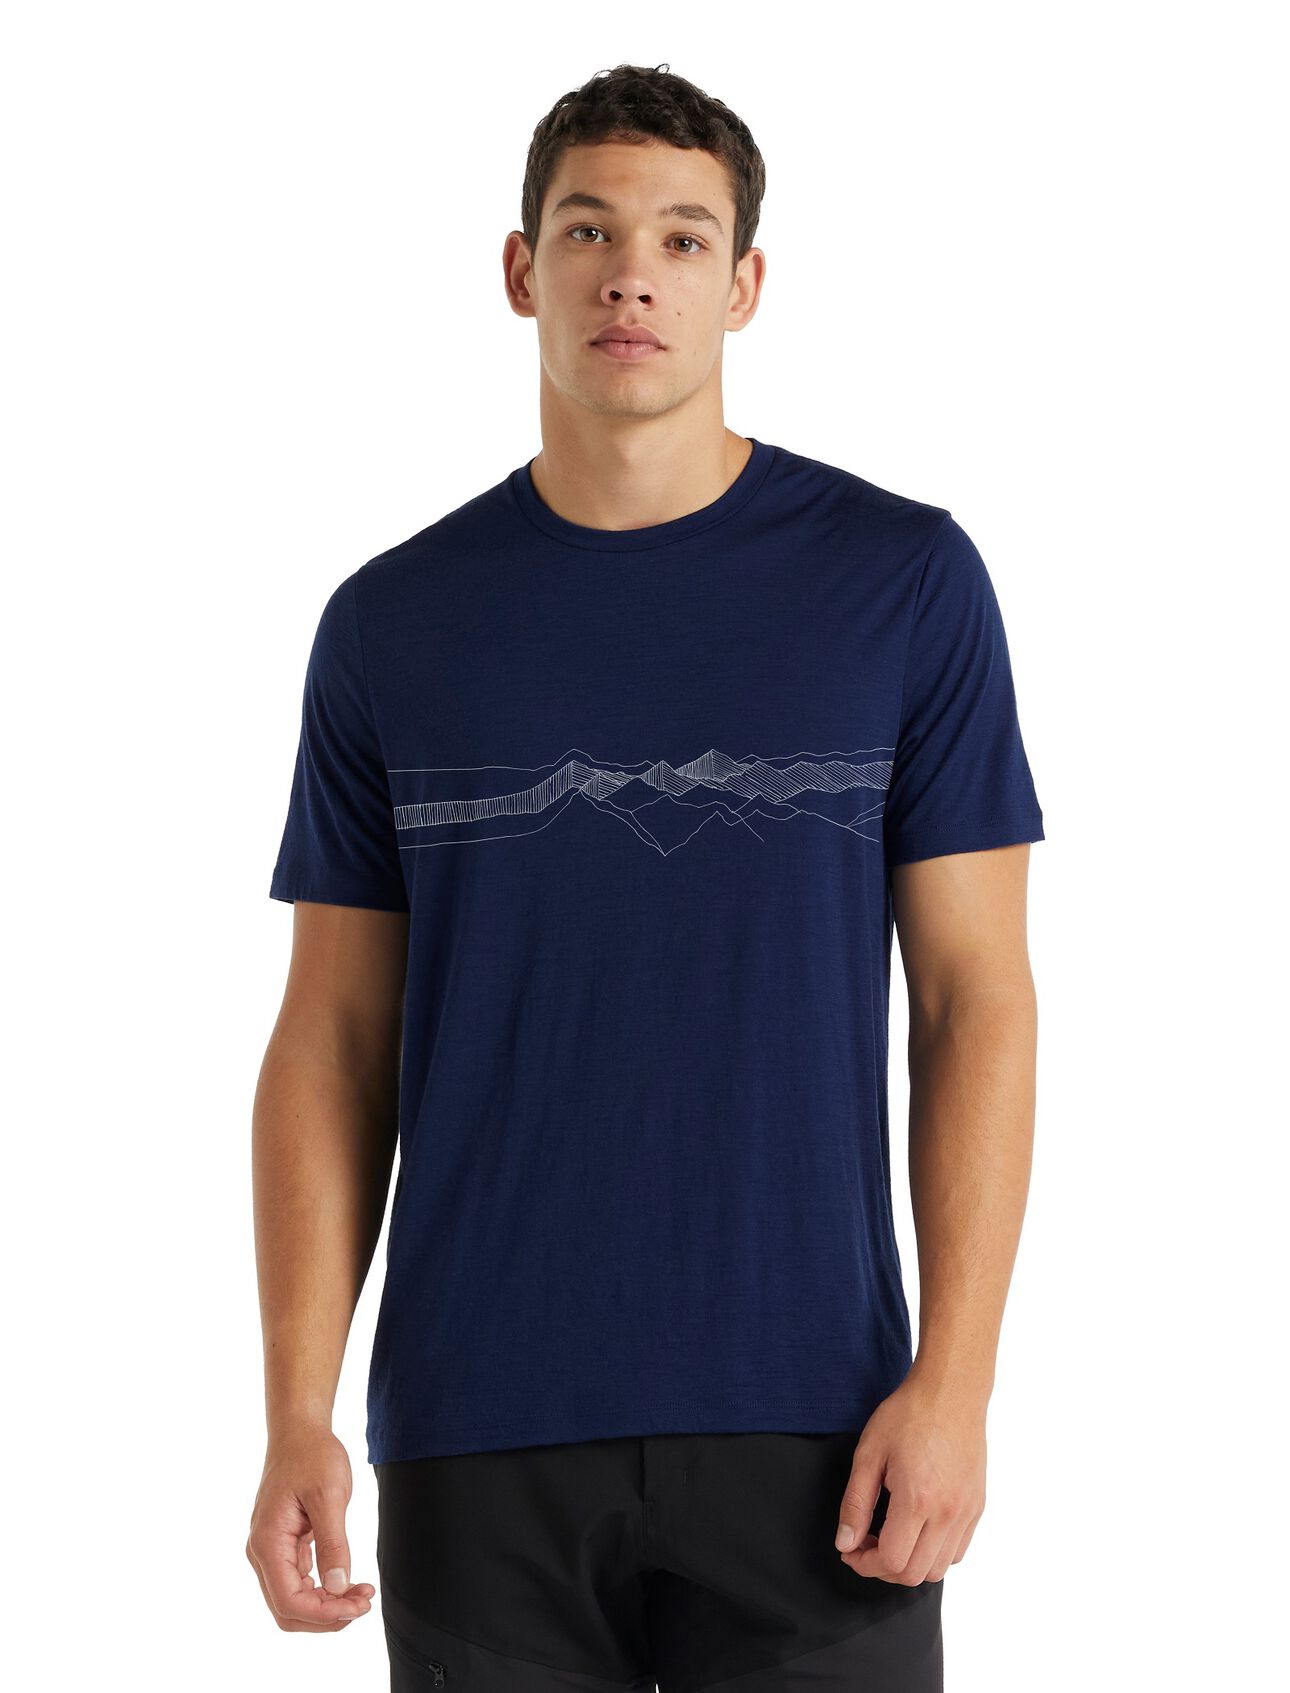 Merino Tech Lite II T-Shirt Peak Patterns